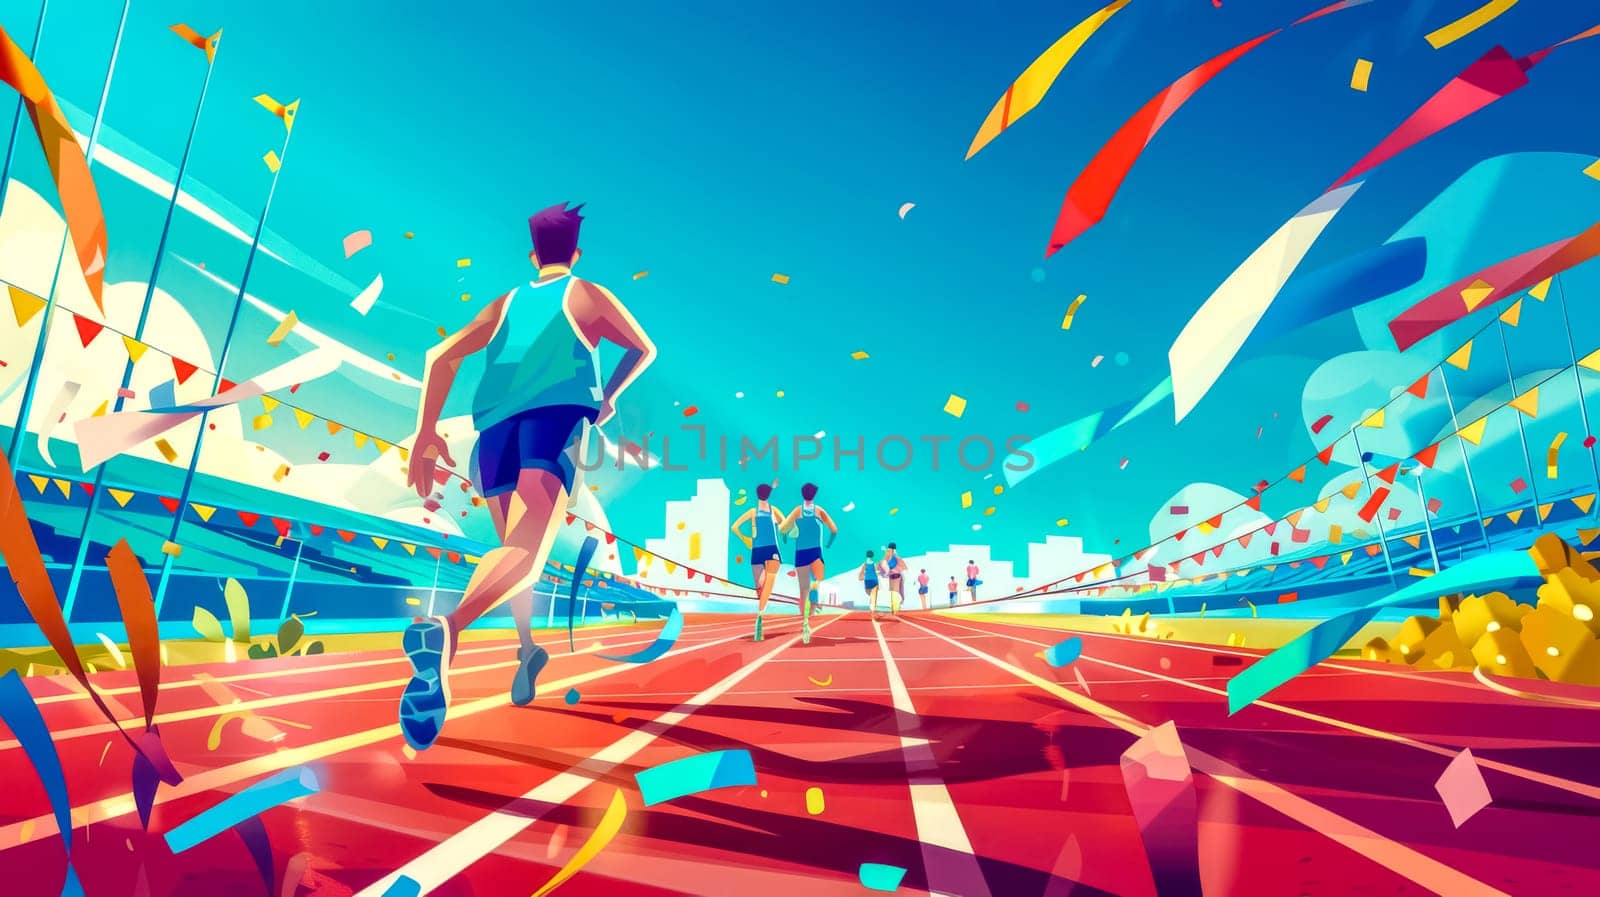 Vibrant illustration of athletes running towards the finish line in a festive marathon setting